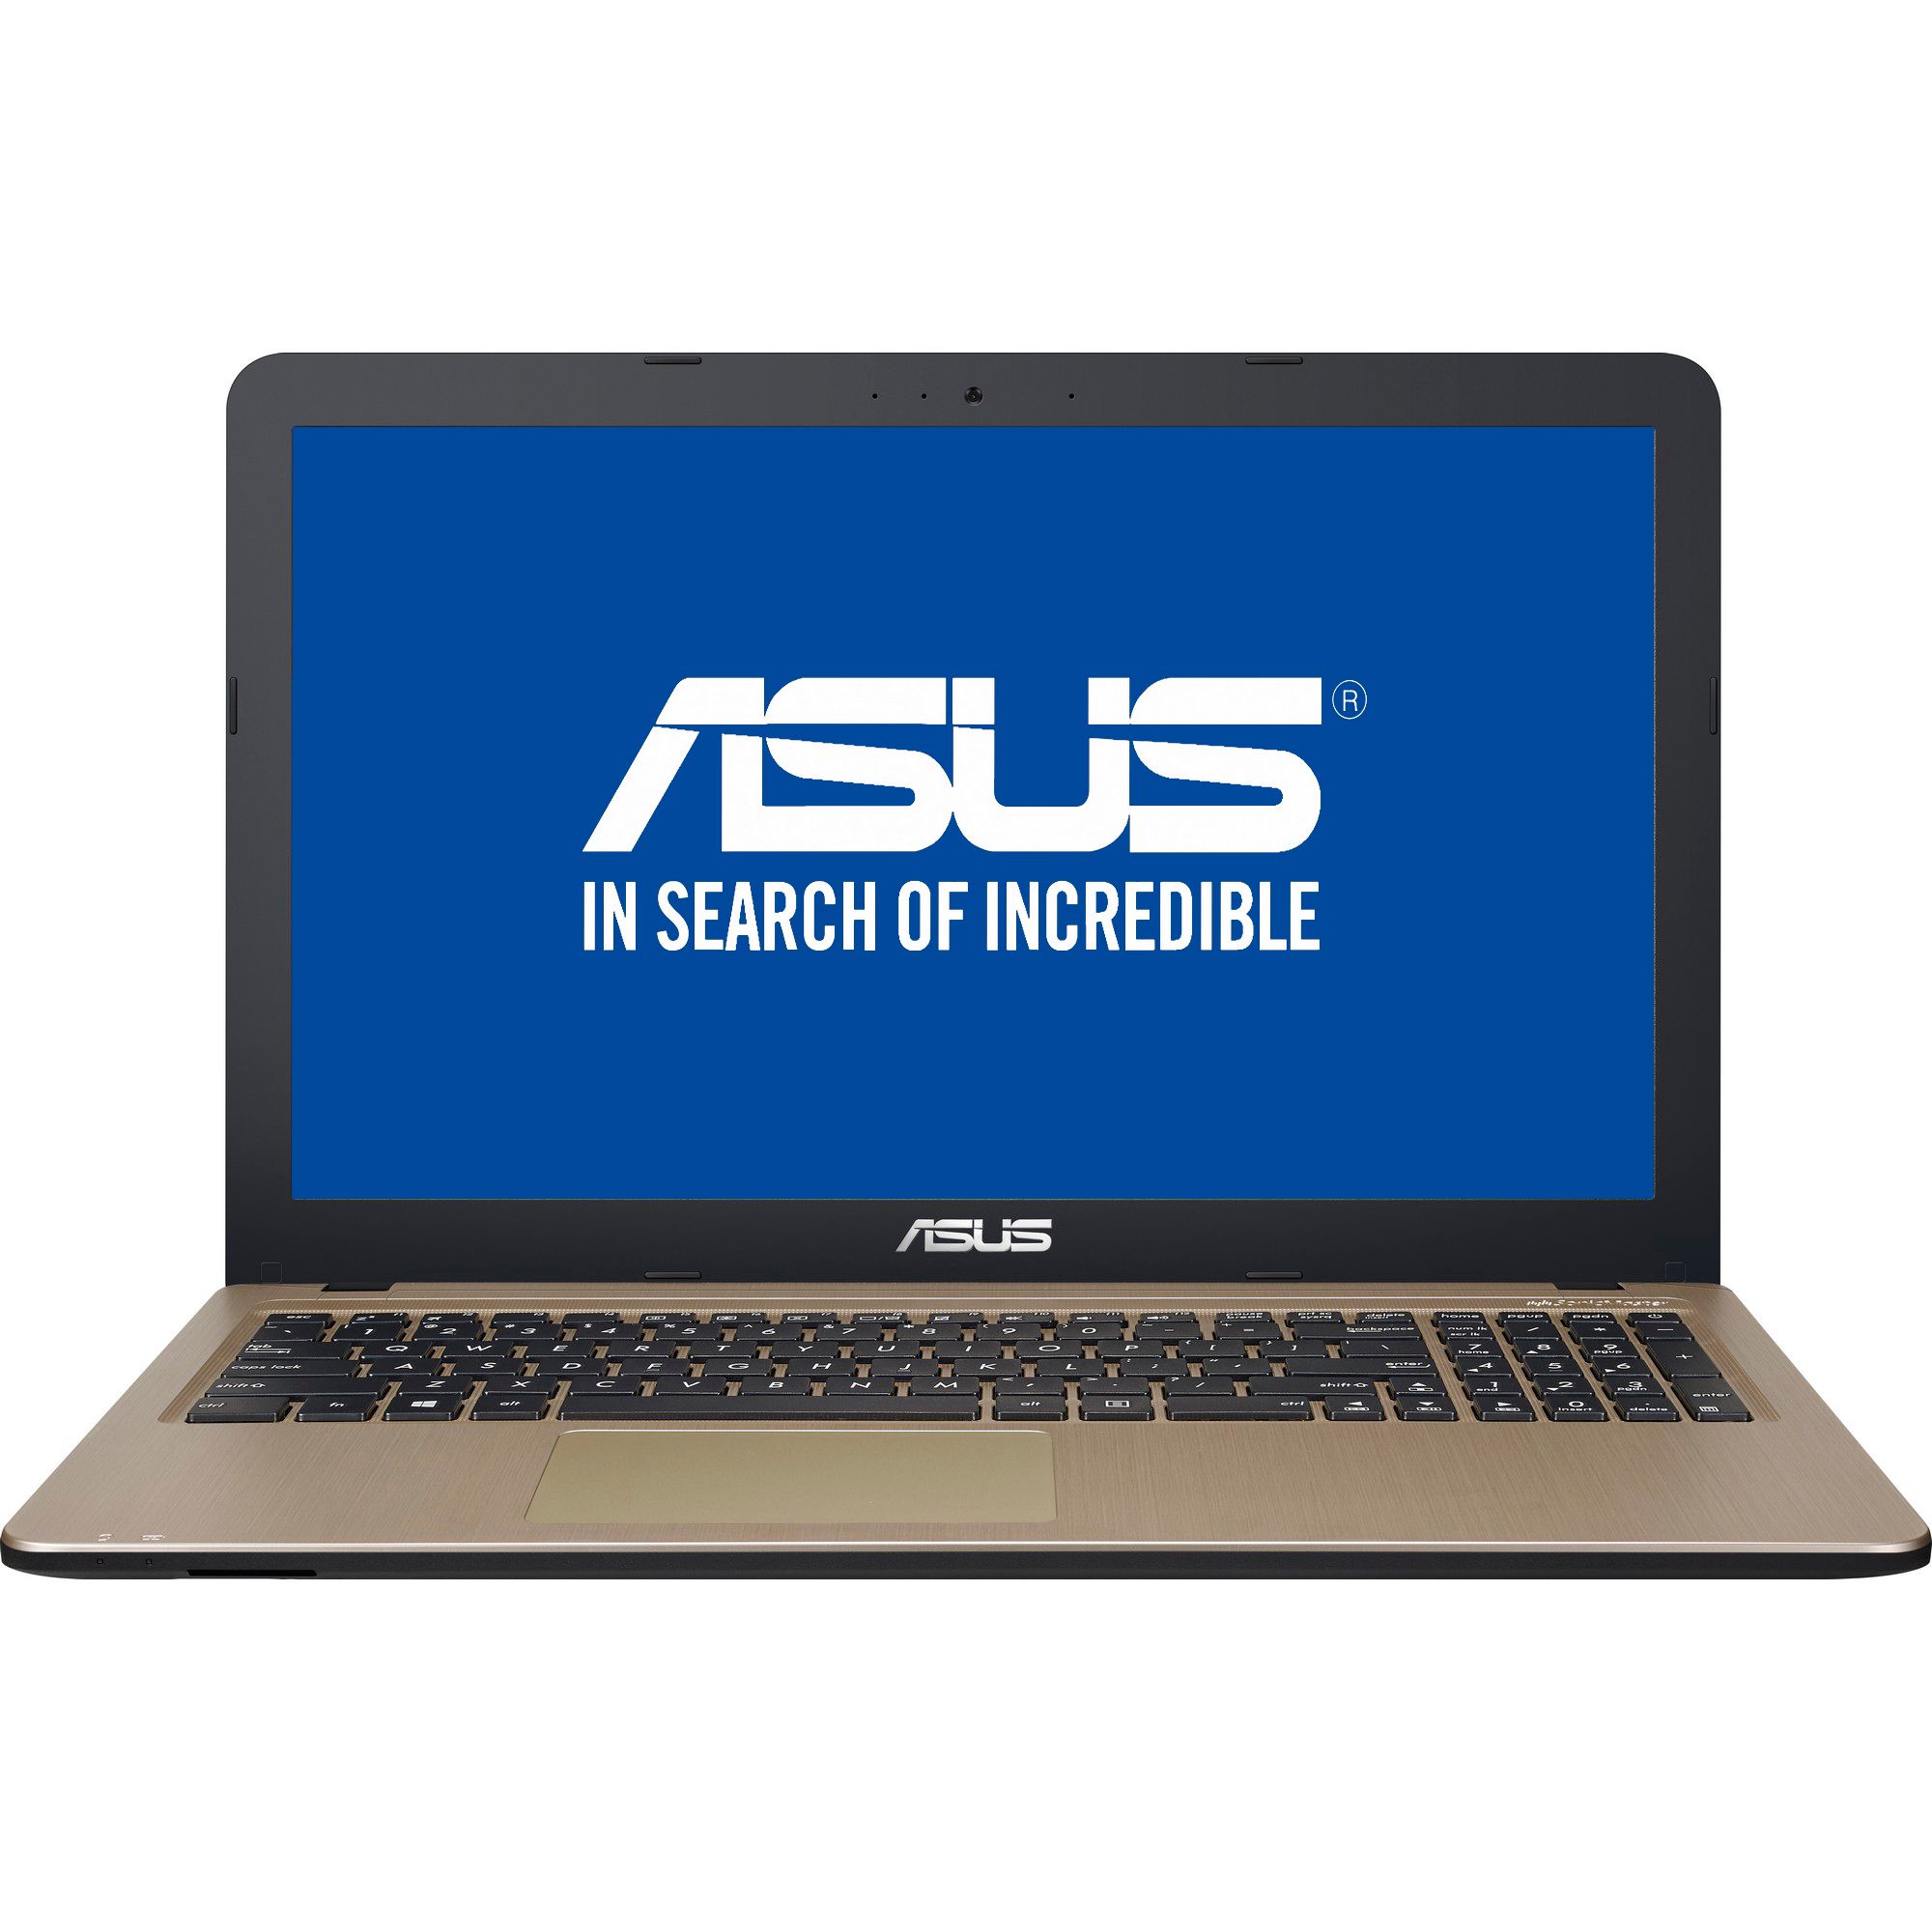 Notebook Asus VivoBook X540UA 15.6 Full HD Intel Core i5-8250U RAM 4GB HDD 1TB Endless